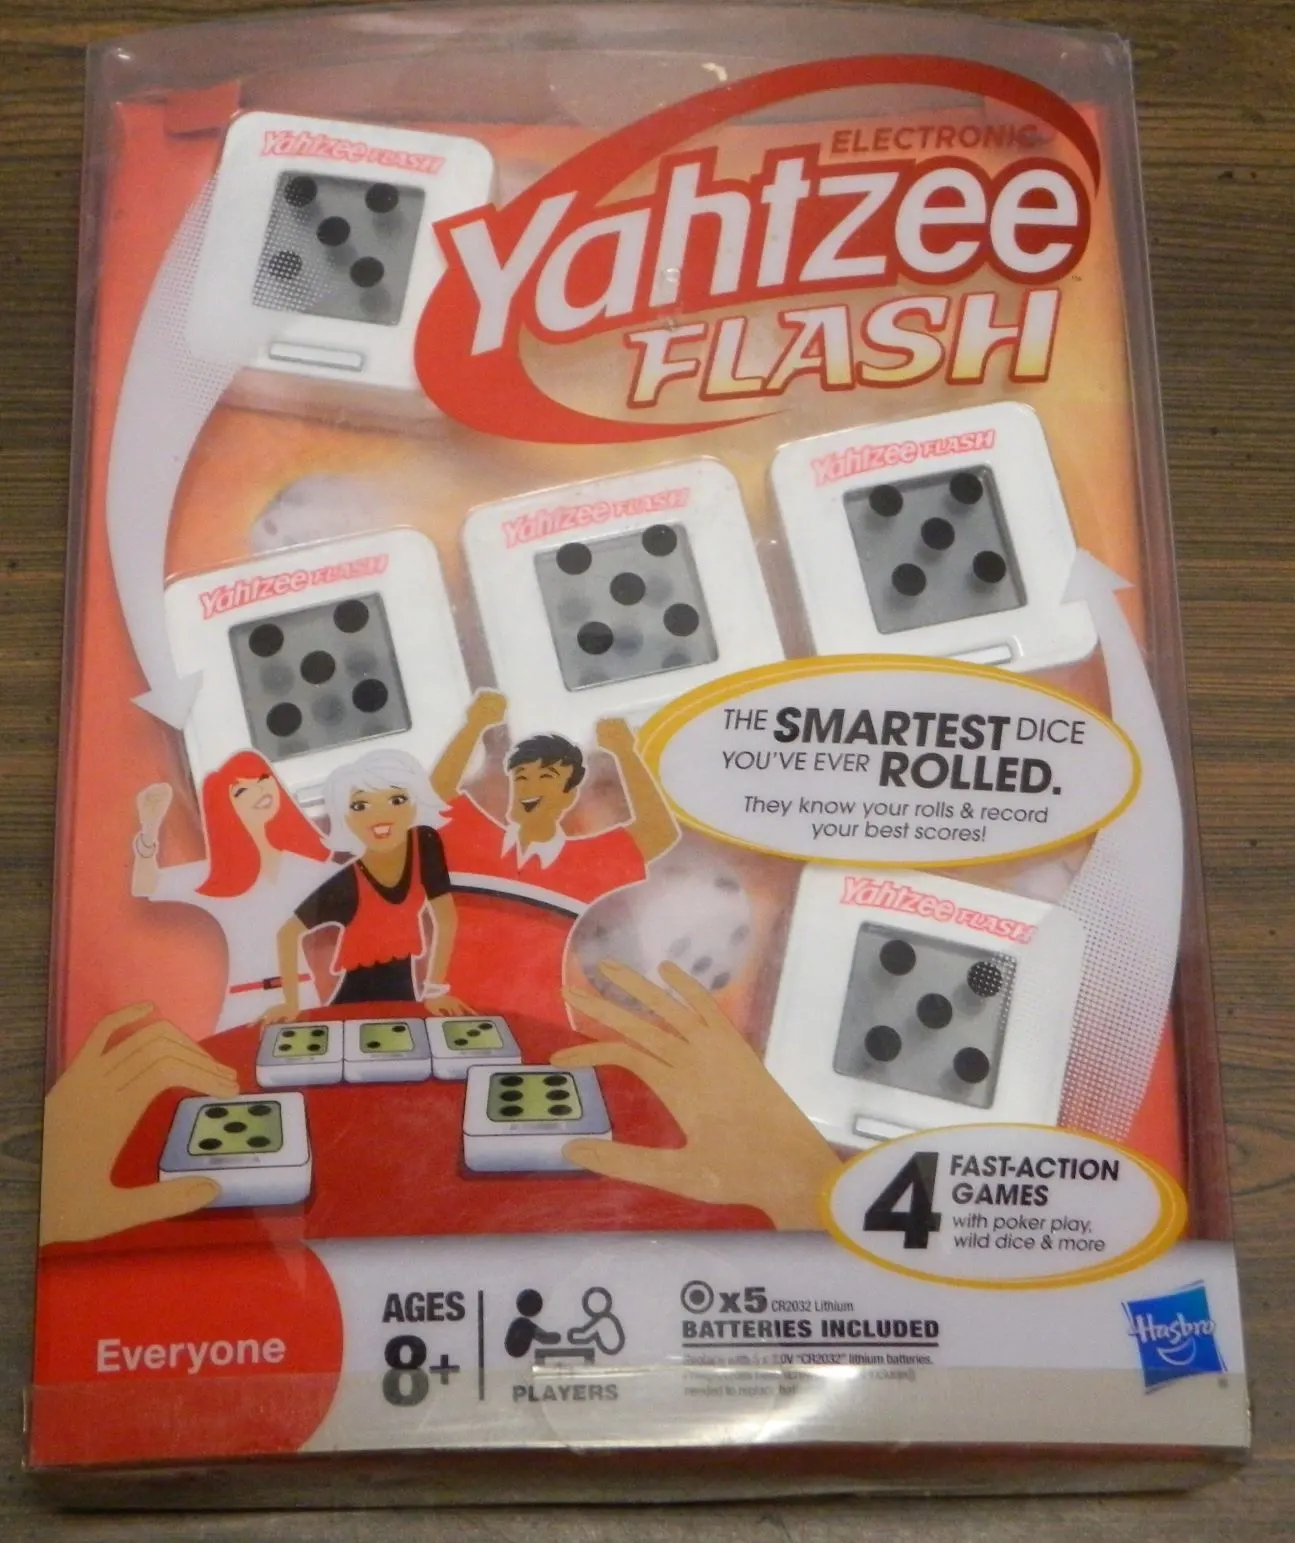 Box for Yahtzee Flash